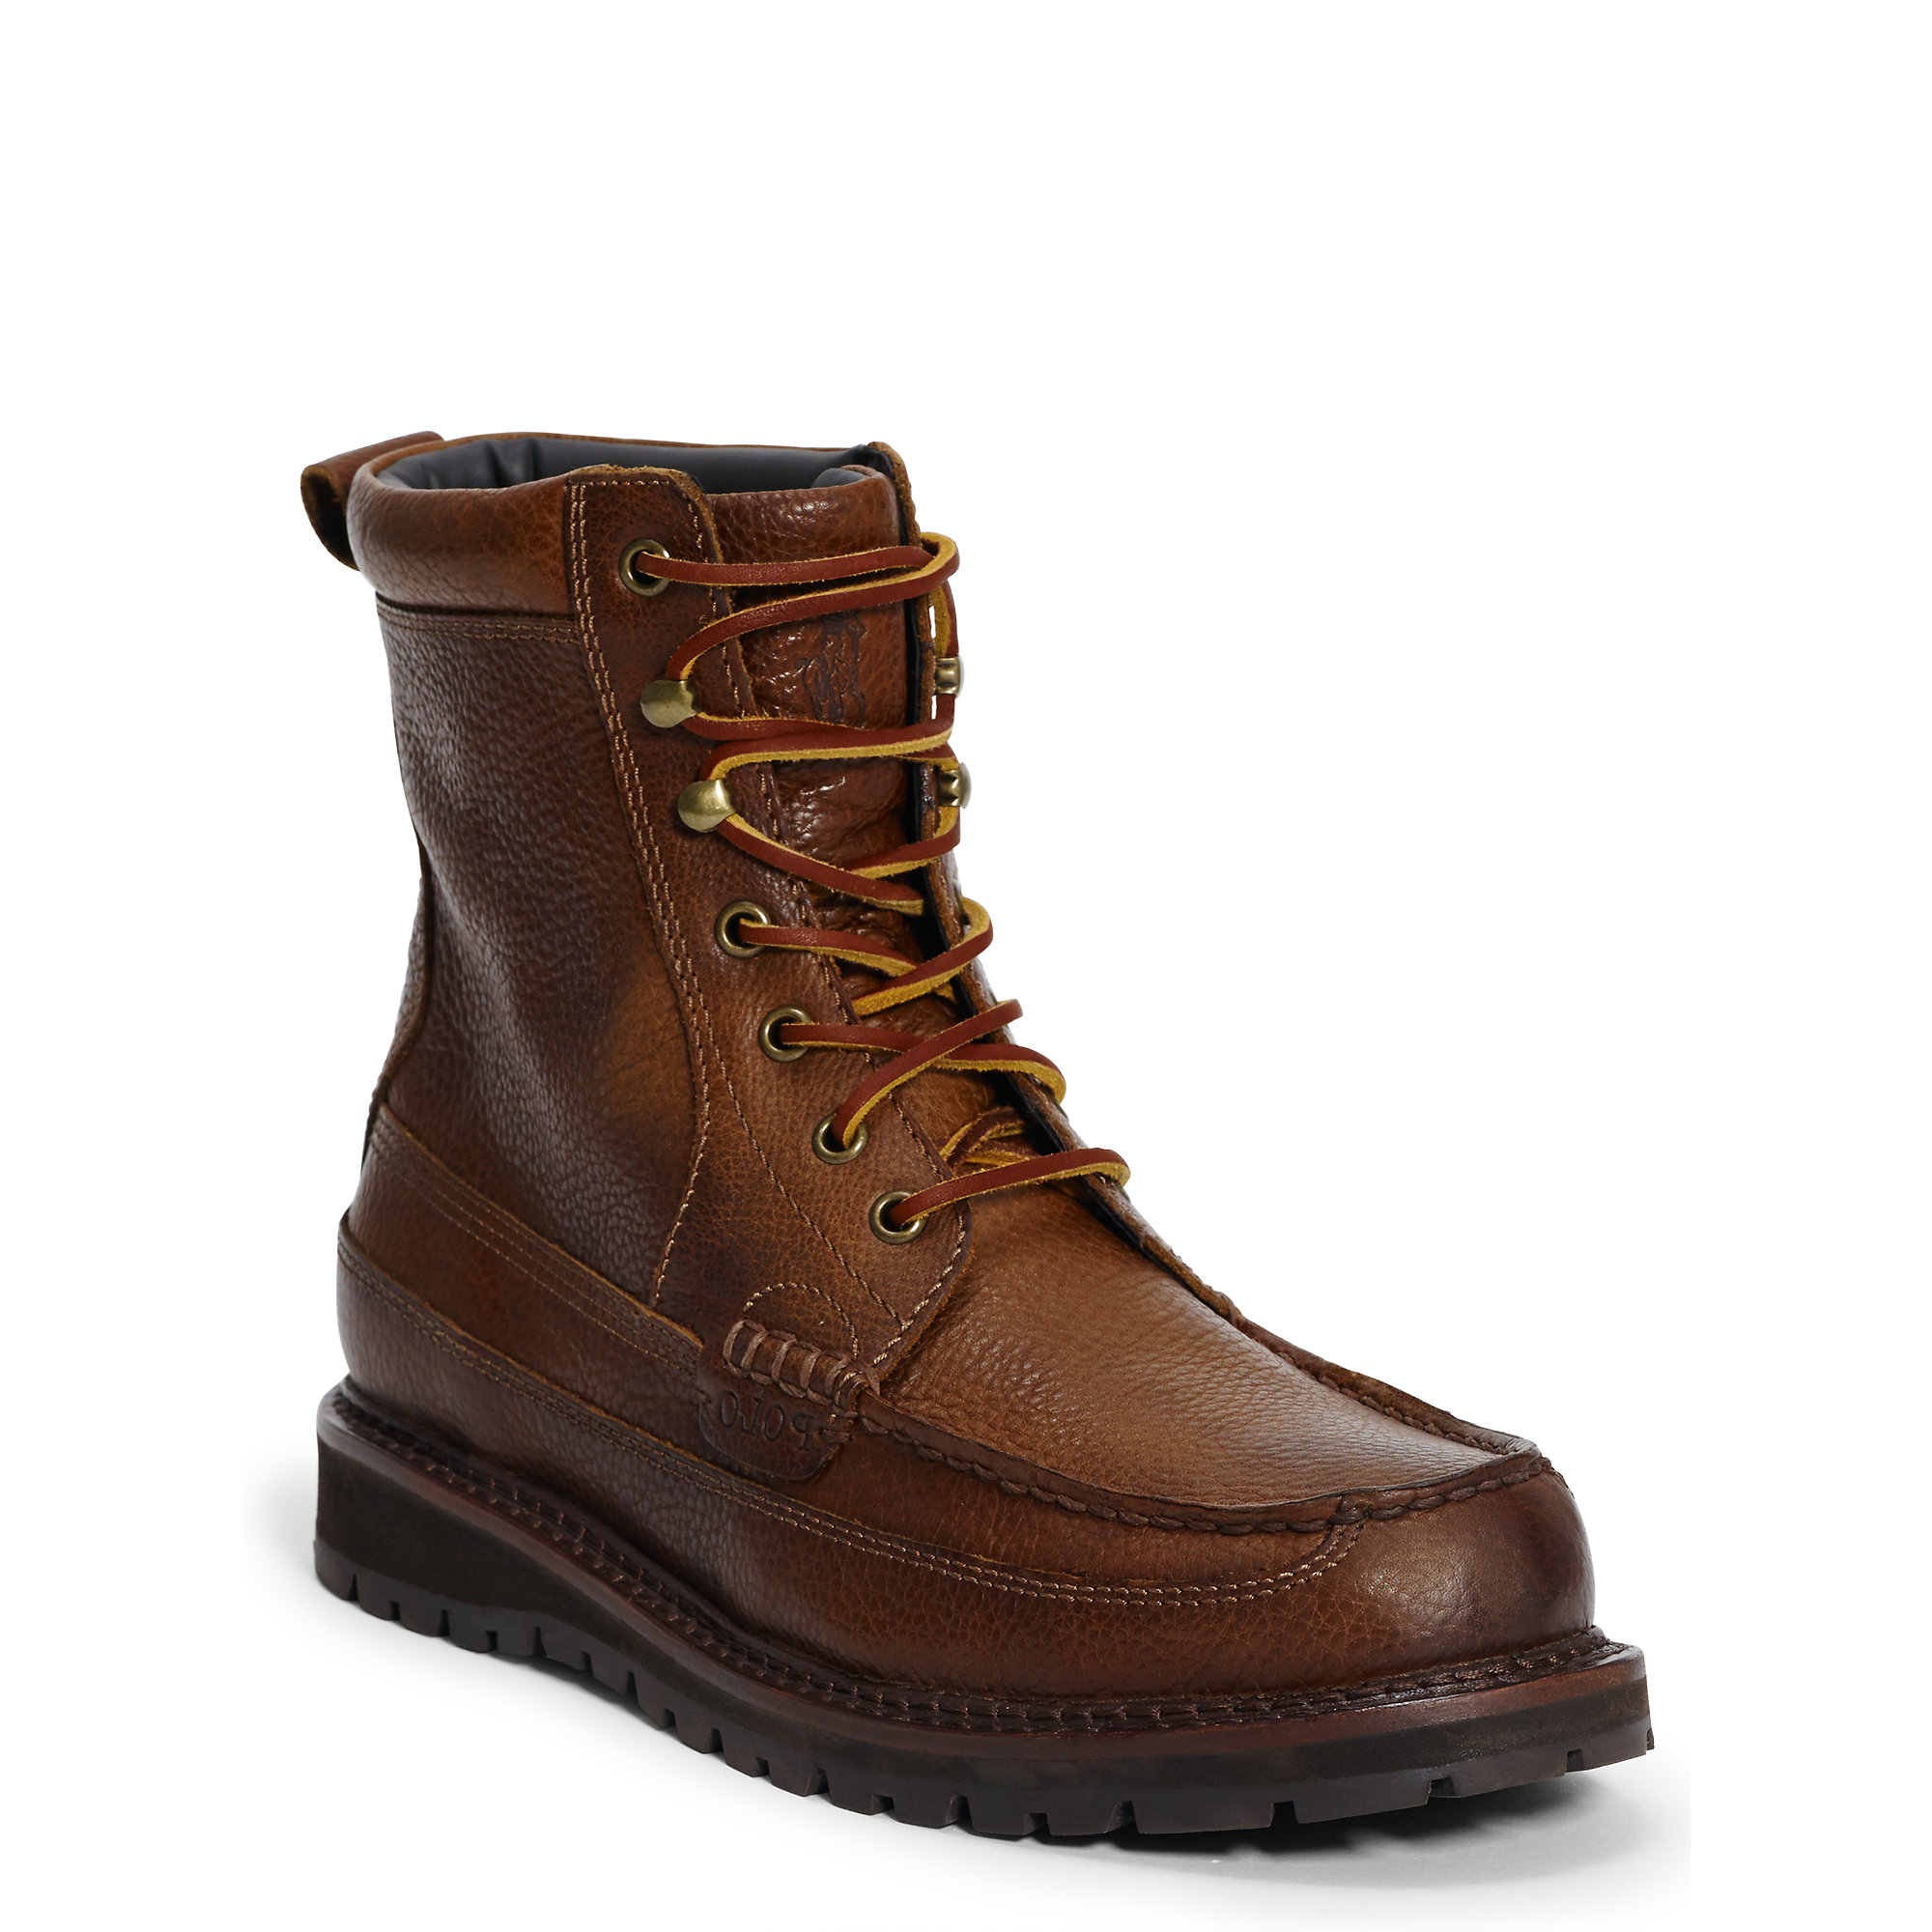 Lyst - Polo Ralph Lauren Willingcott Leather Boot in Brown for Men